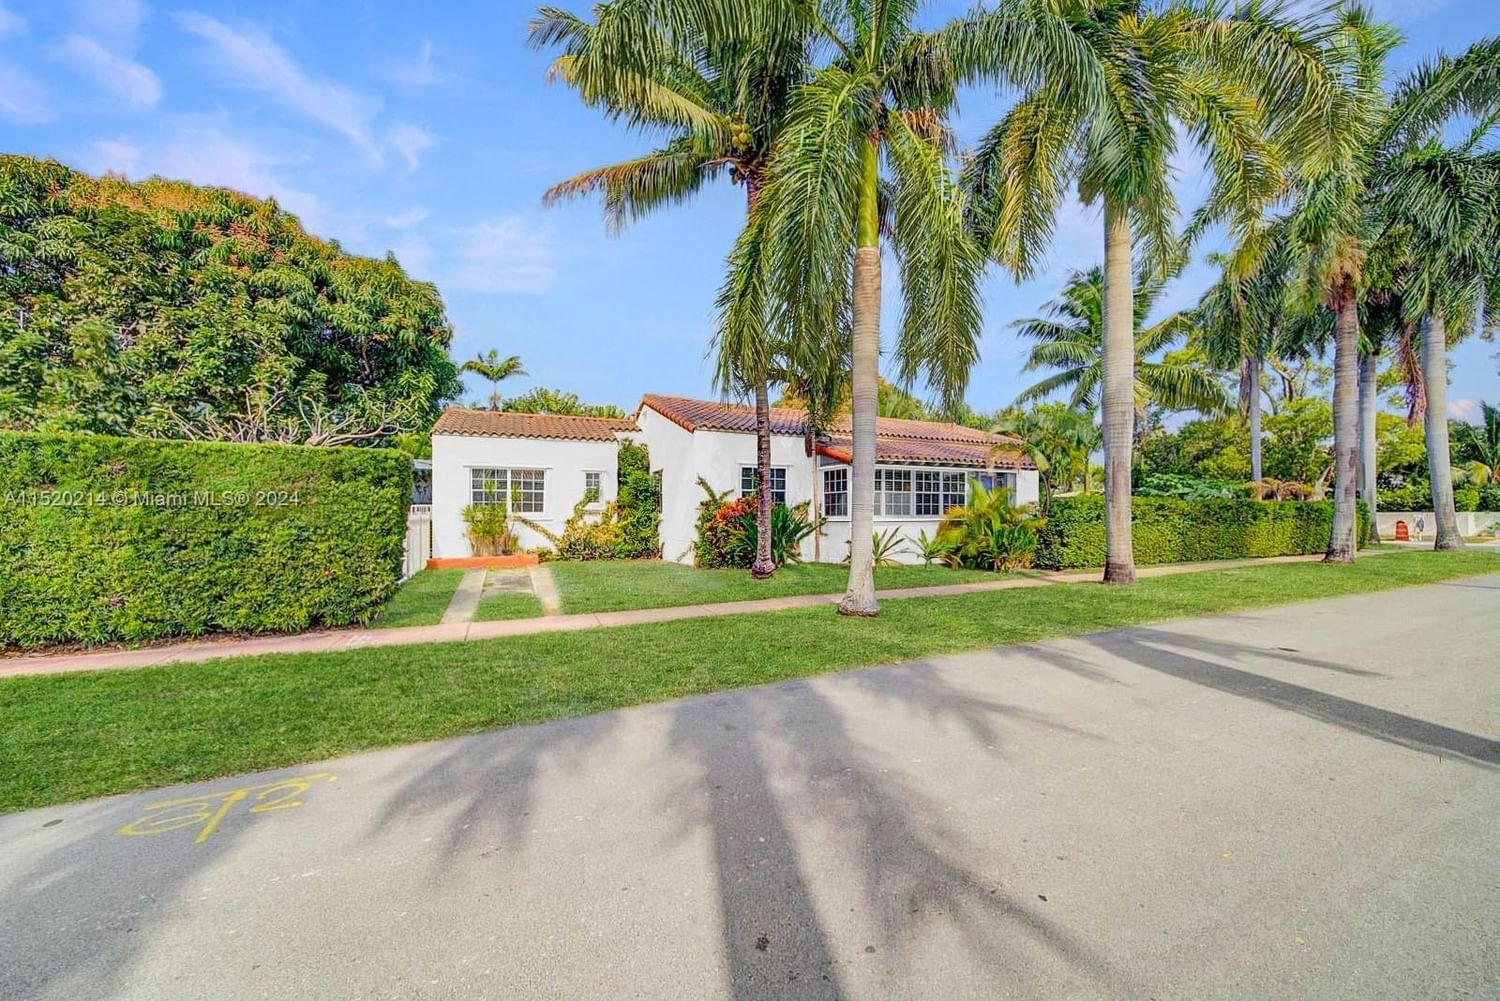 Real estate property located at 1300 Lenox Ave., Miami-Dade County, OCEAN BEACH ADDN NO 3, Miami Beach, FL